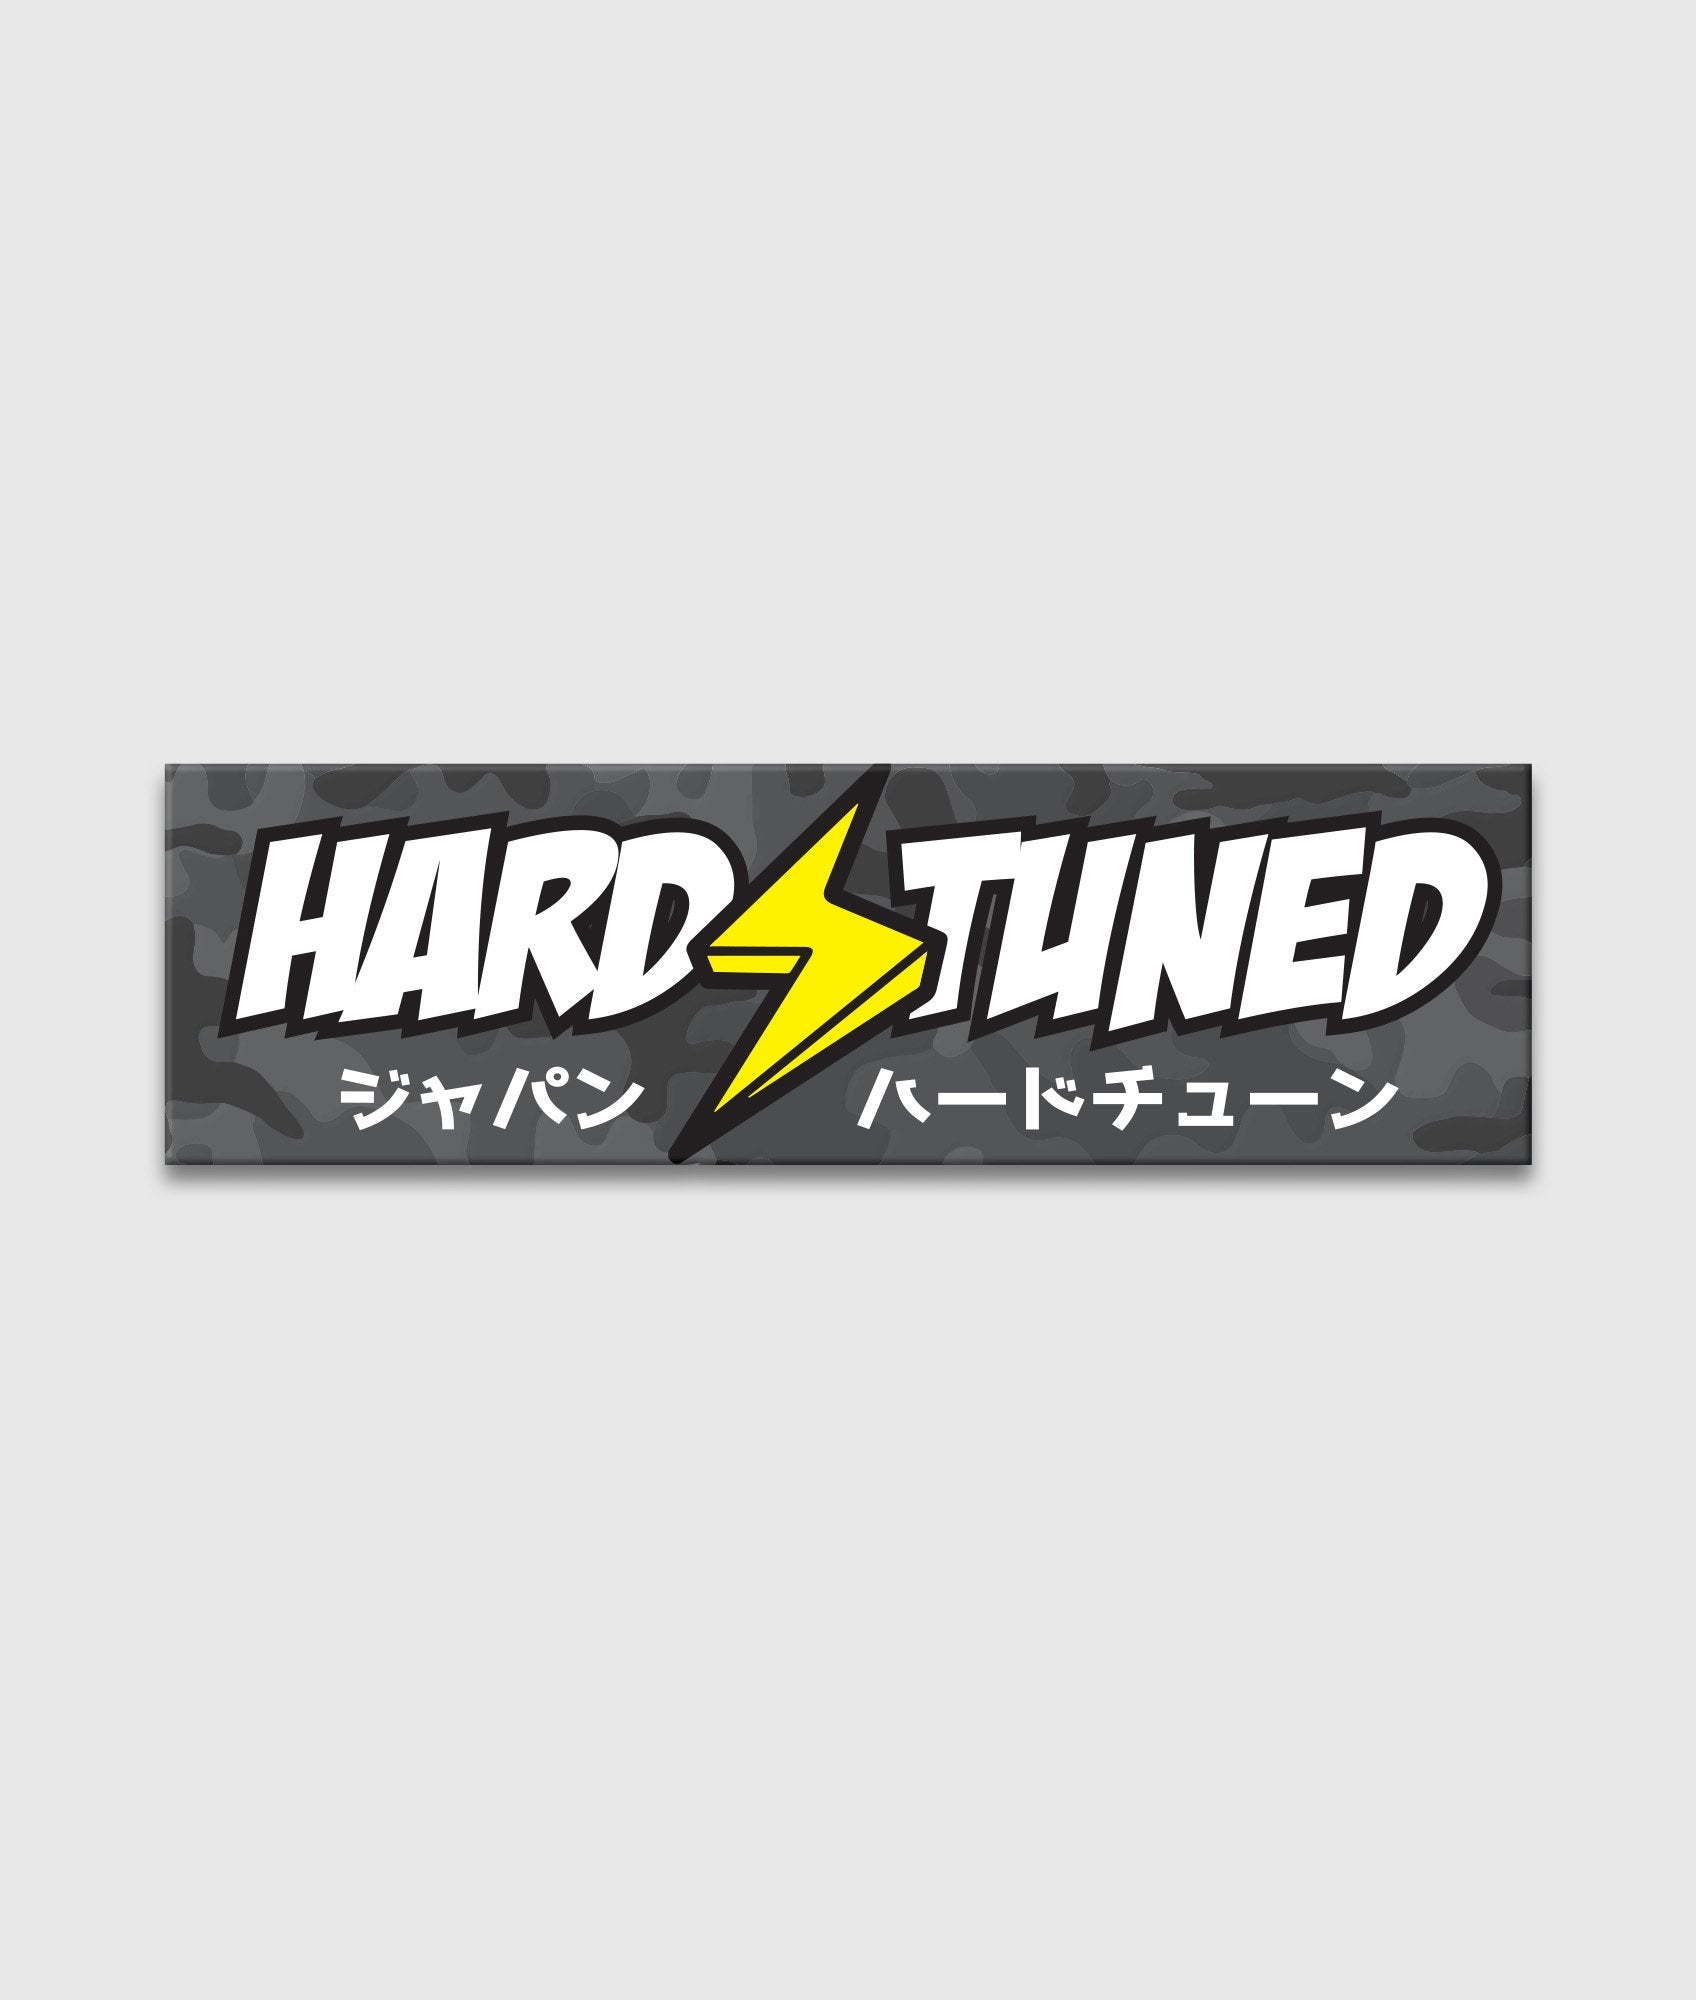 Hardtuned Power Camo - Hardtuned